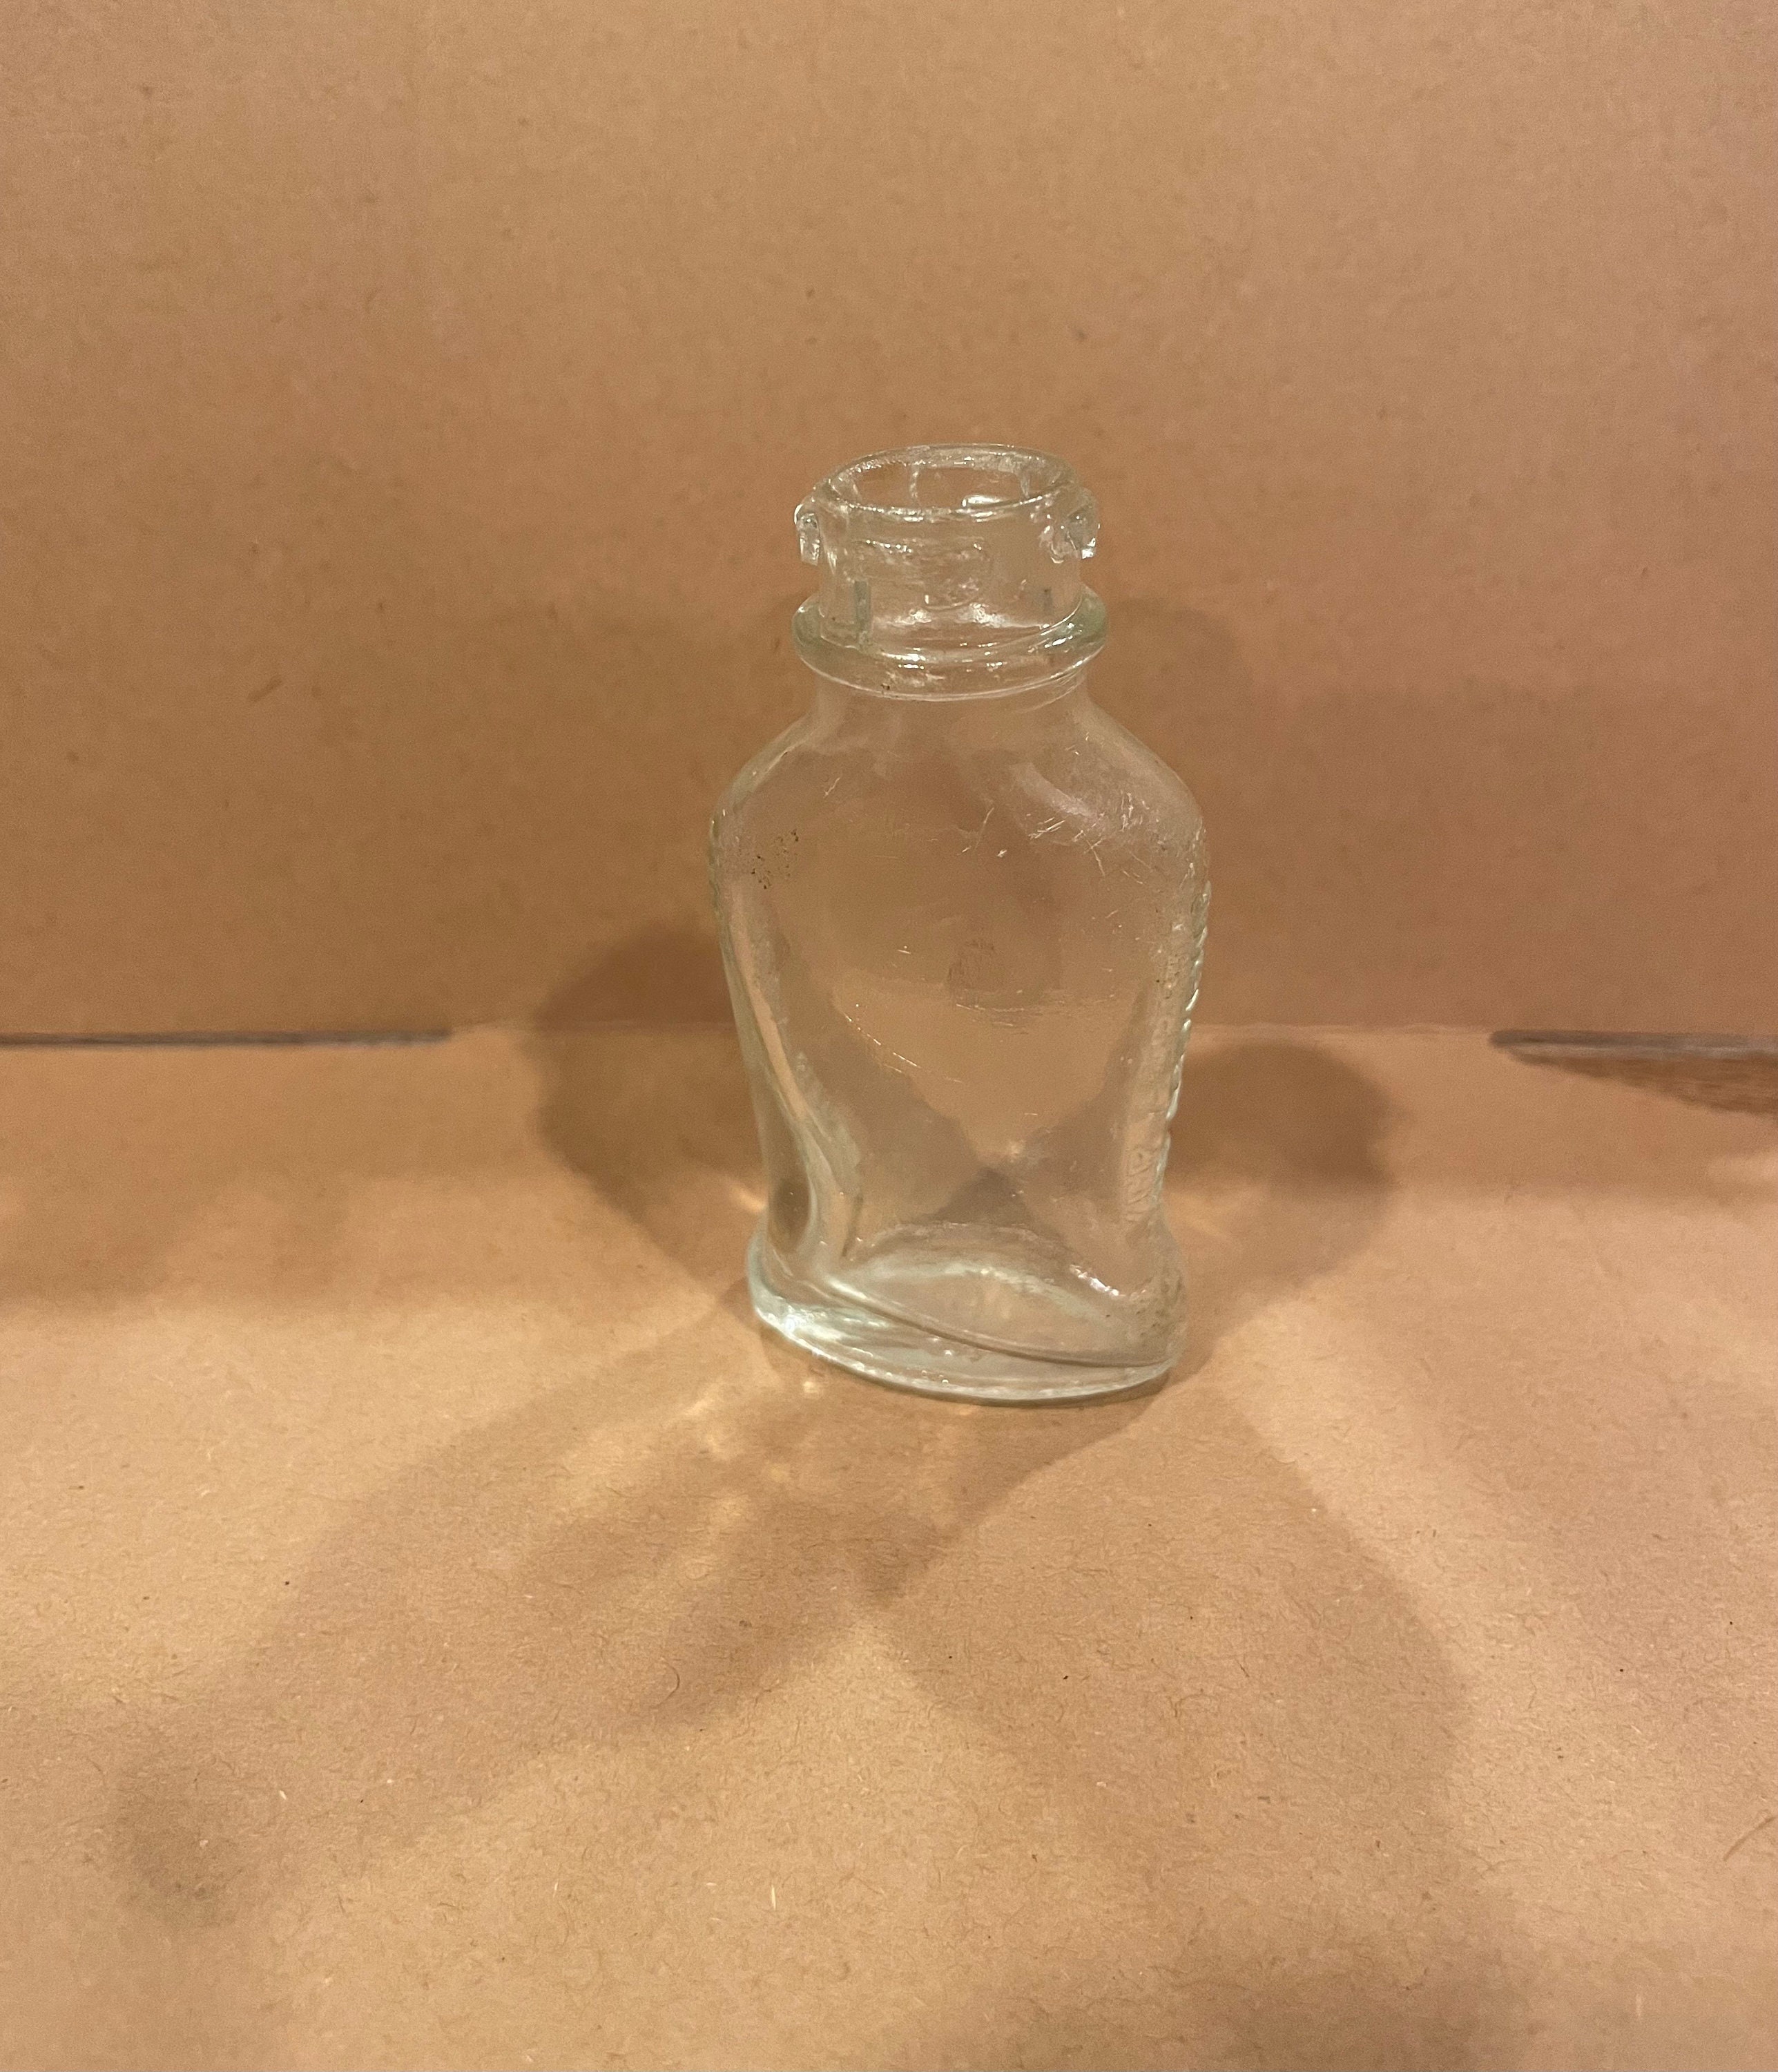 Bayer Aspirin Clear Glass Bottle, Vintage